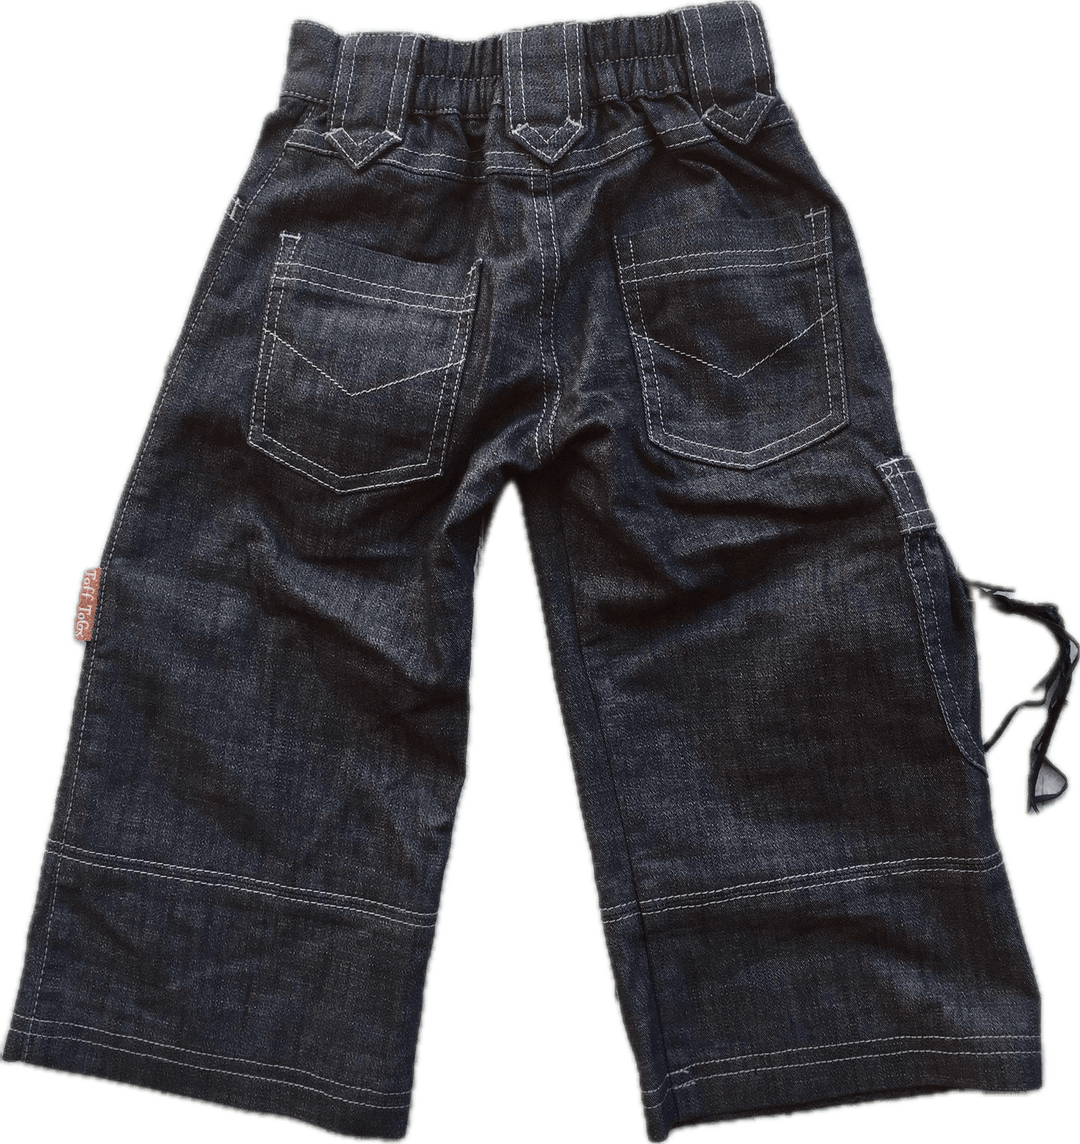 Toff Togs Wide Leg Denim Jeans - Size 18/24M - Jean Pool